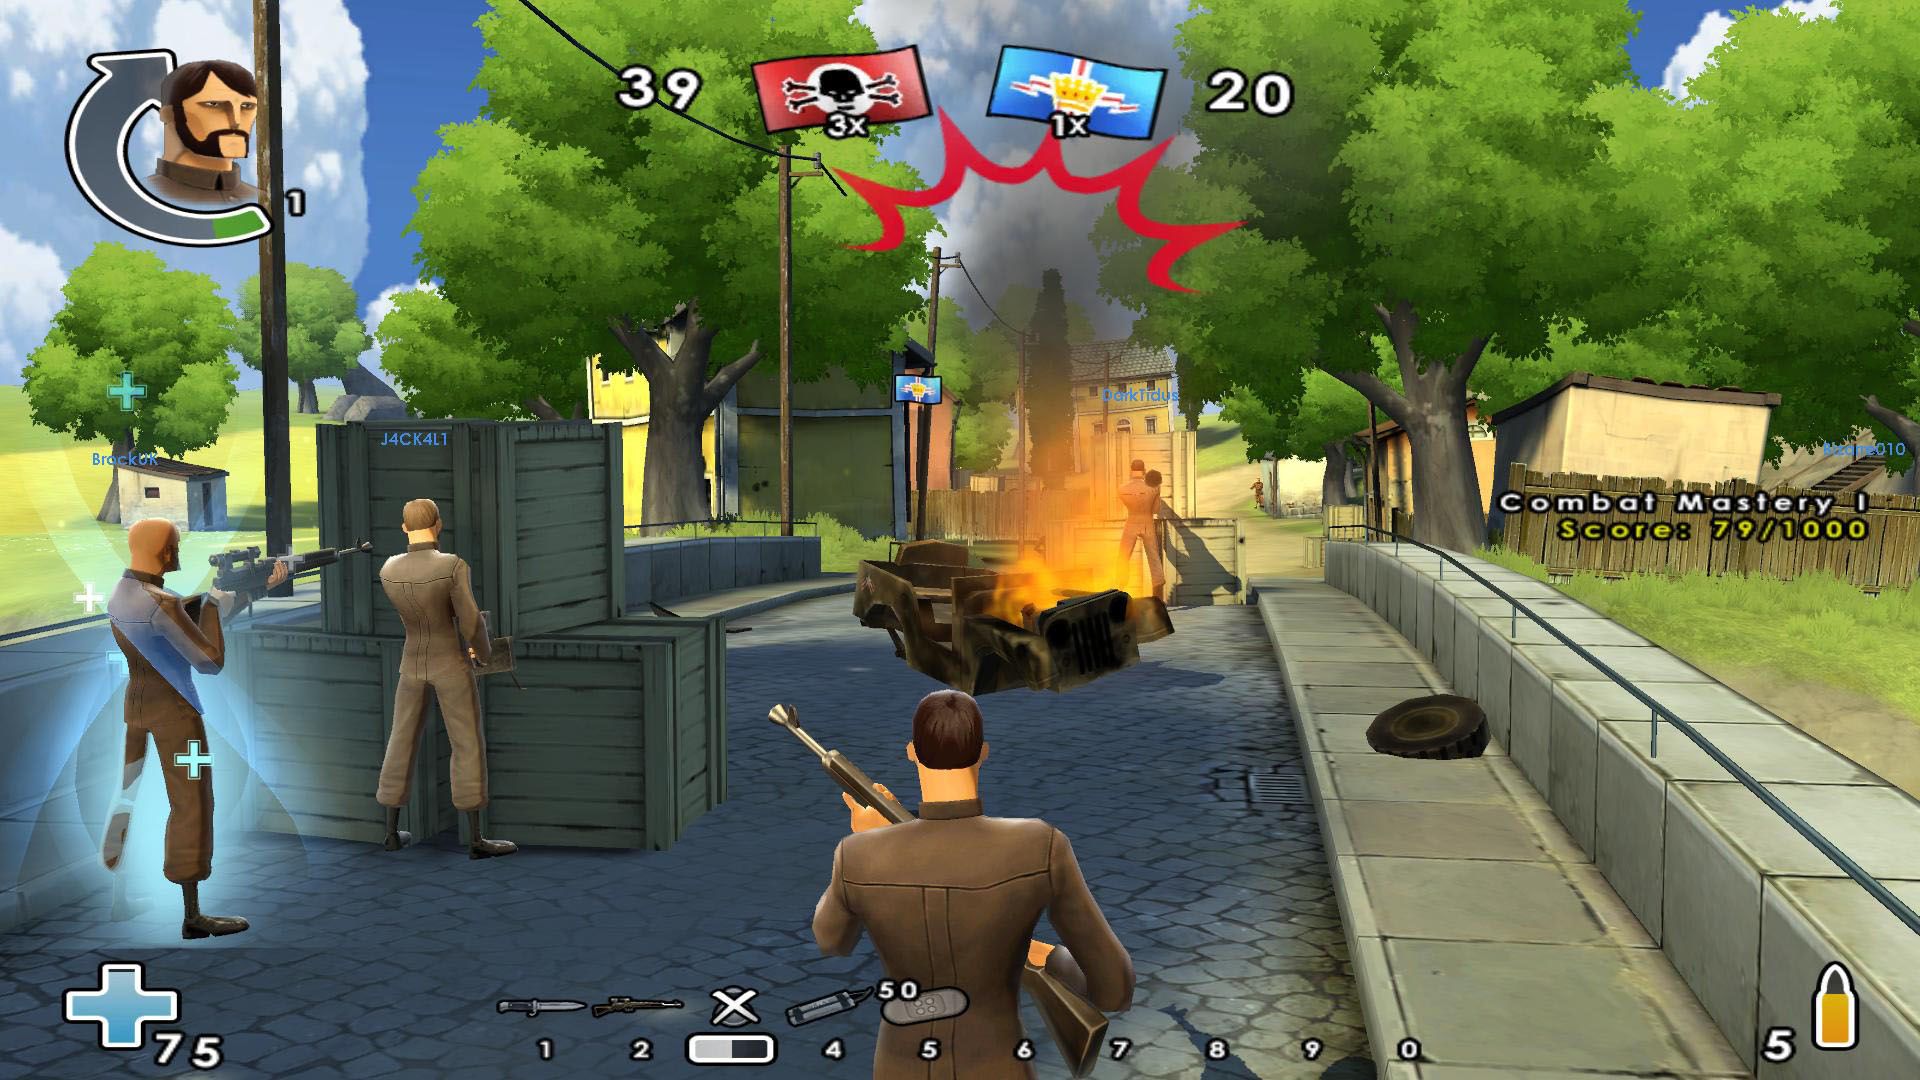 shooter-mmo-games-battlefield-heroes-screenshot.jpg (1920×1080)